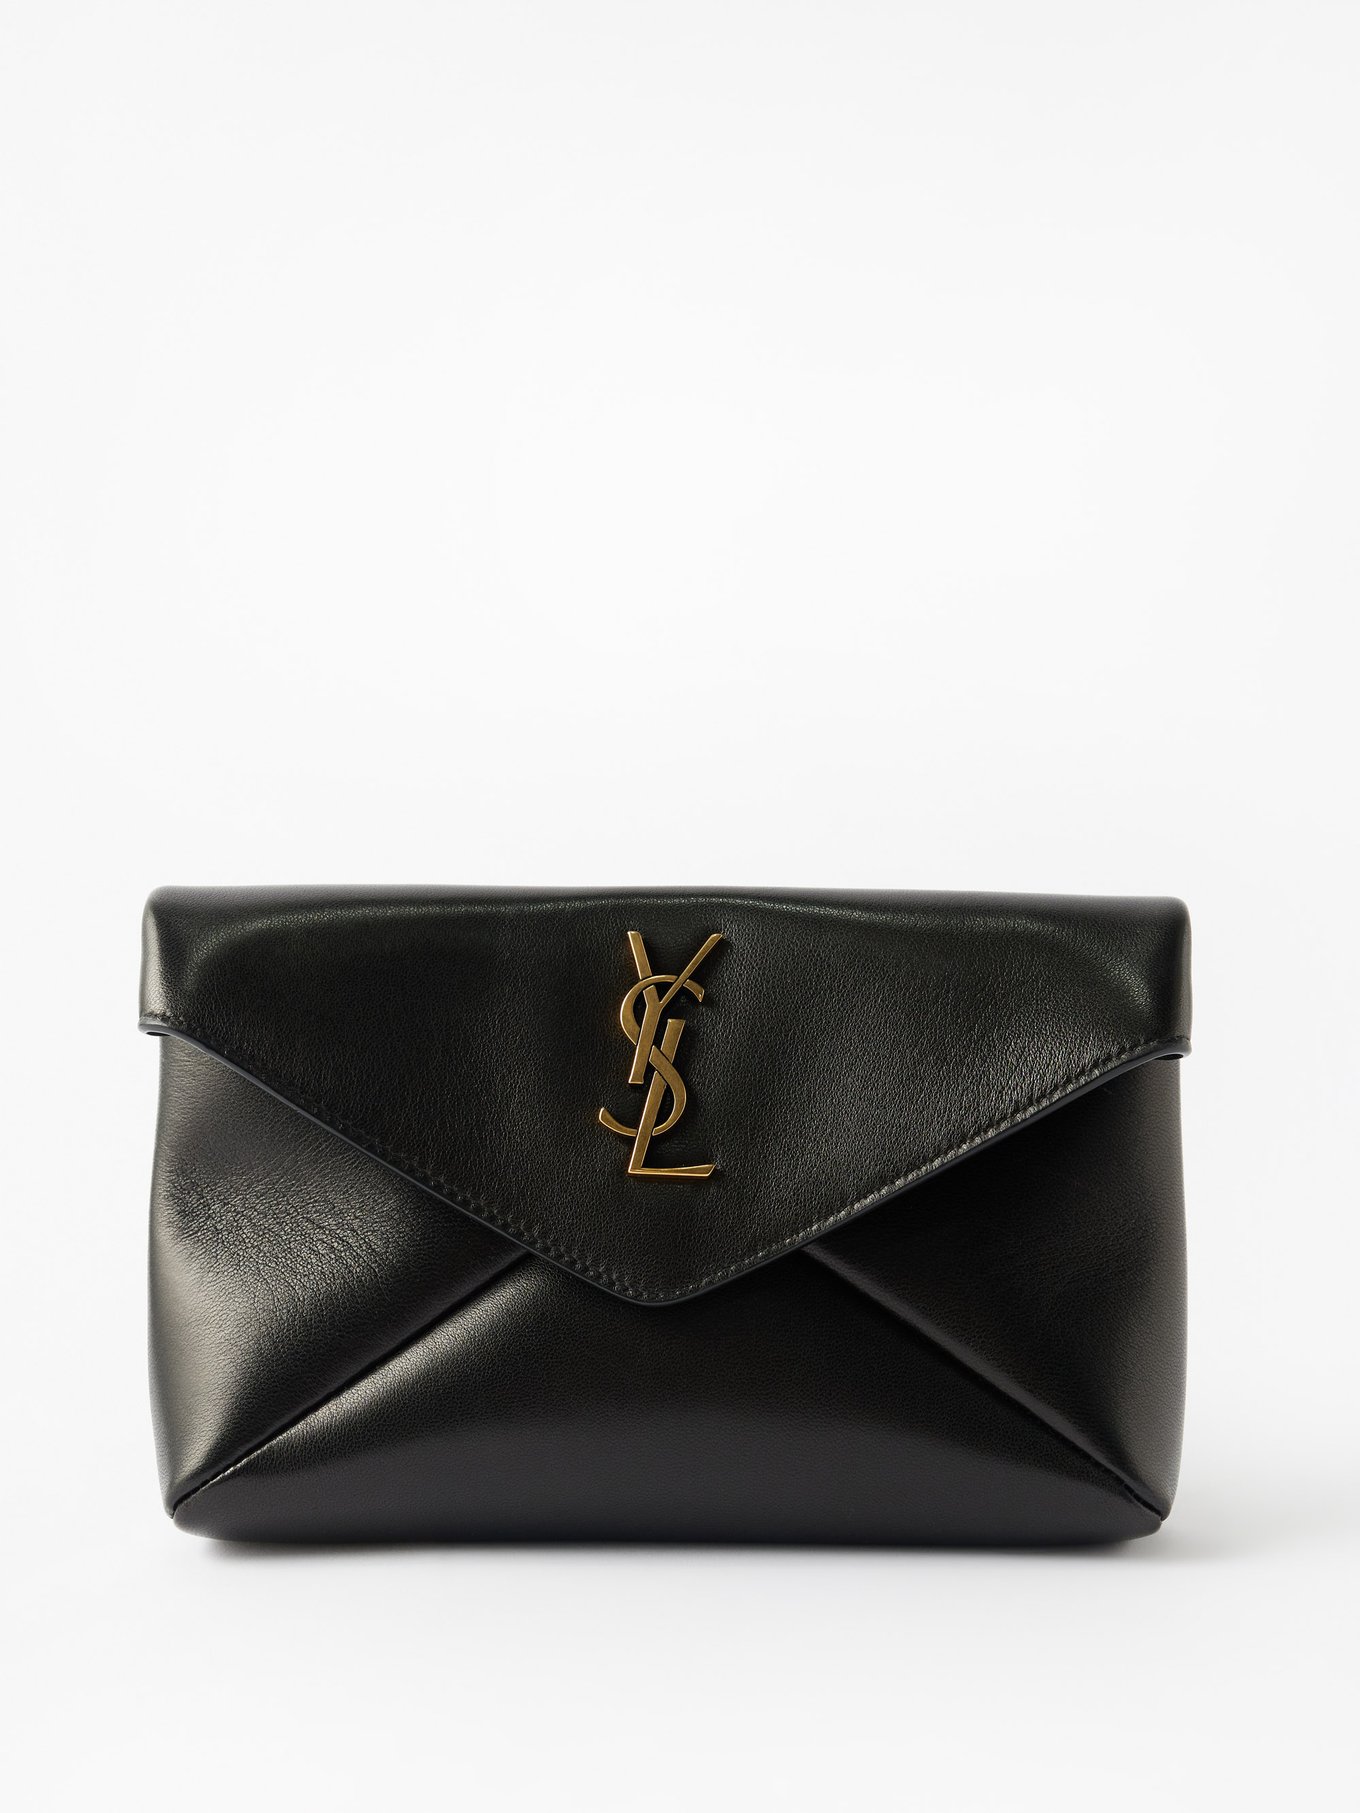 Buy Saint Laurent Monogram Clutch Bag for Womens